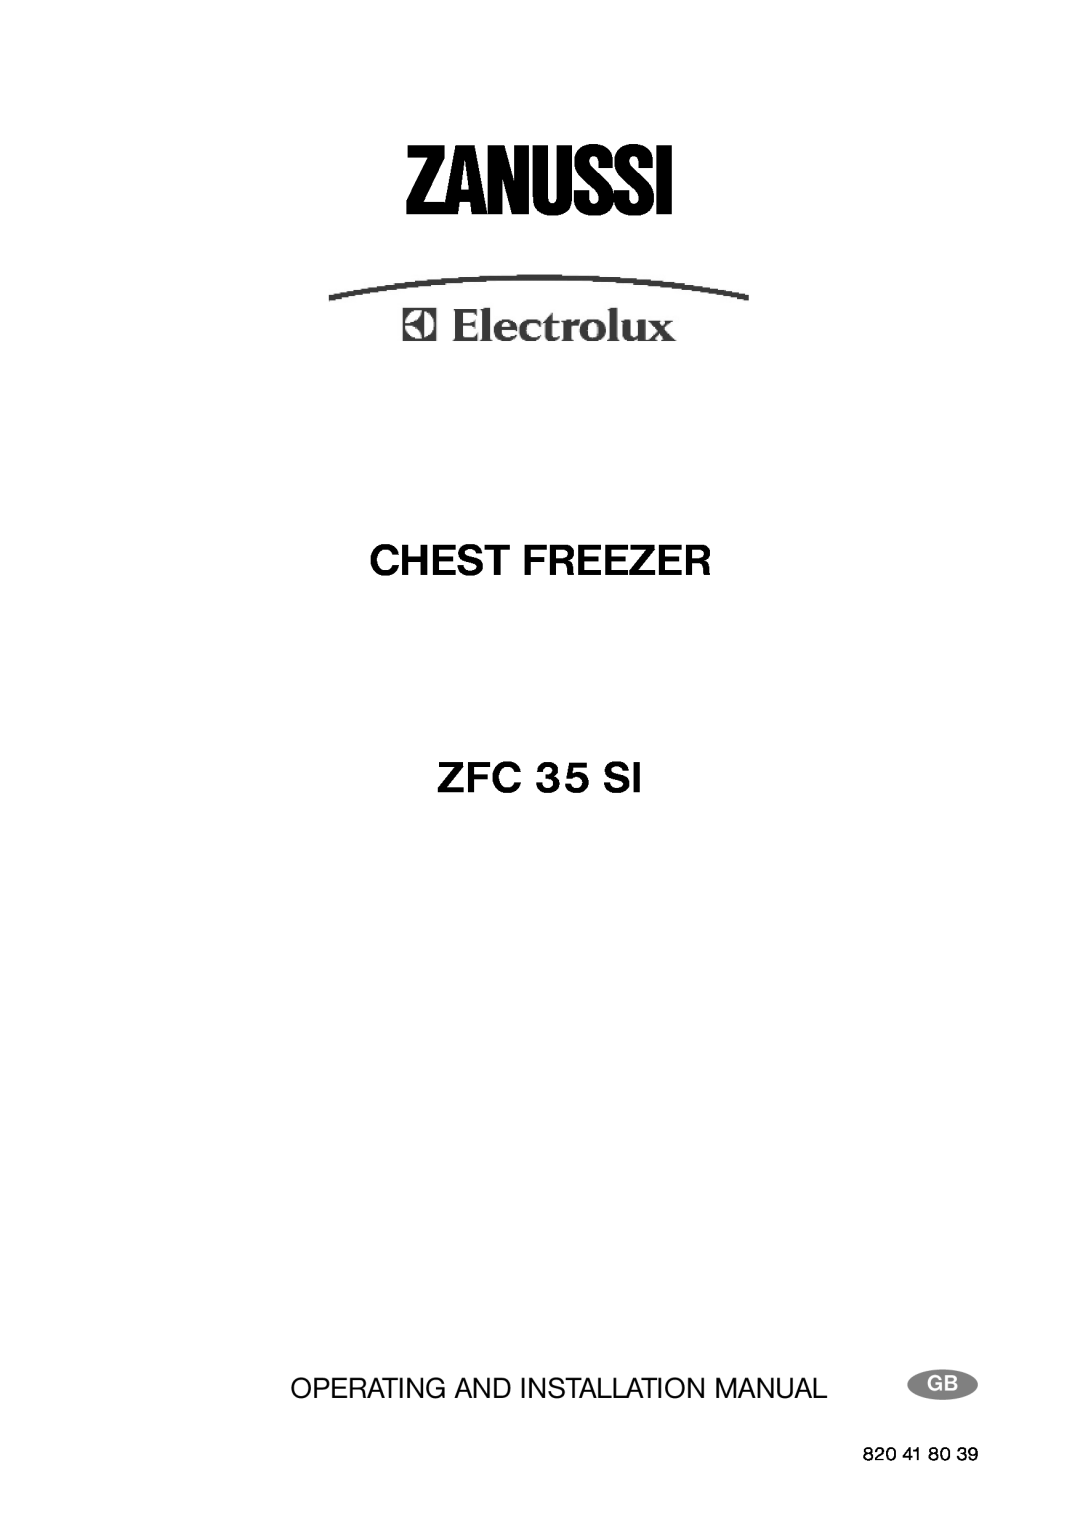 Zanussi installation manual Zanussi, CHEST FREEZER ZFC 35 SI, Operating And Installation Manual, 820 41 